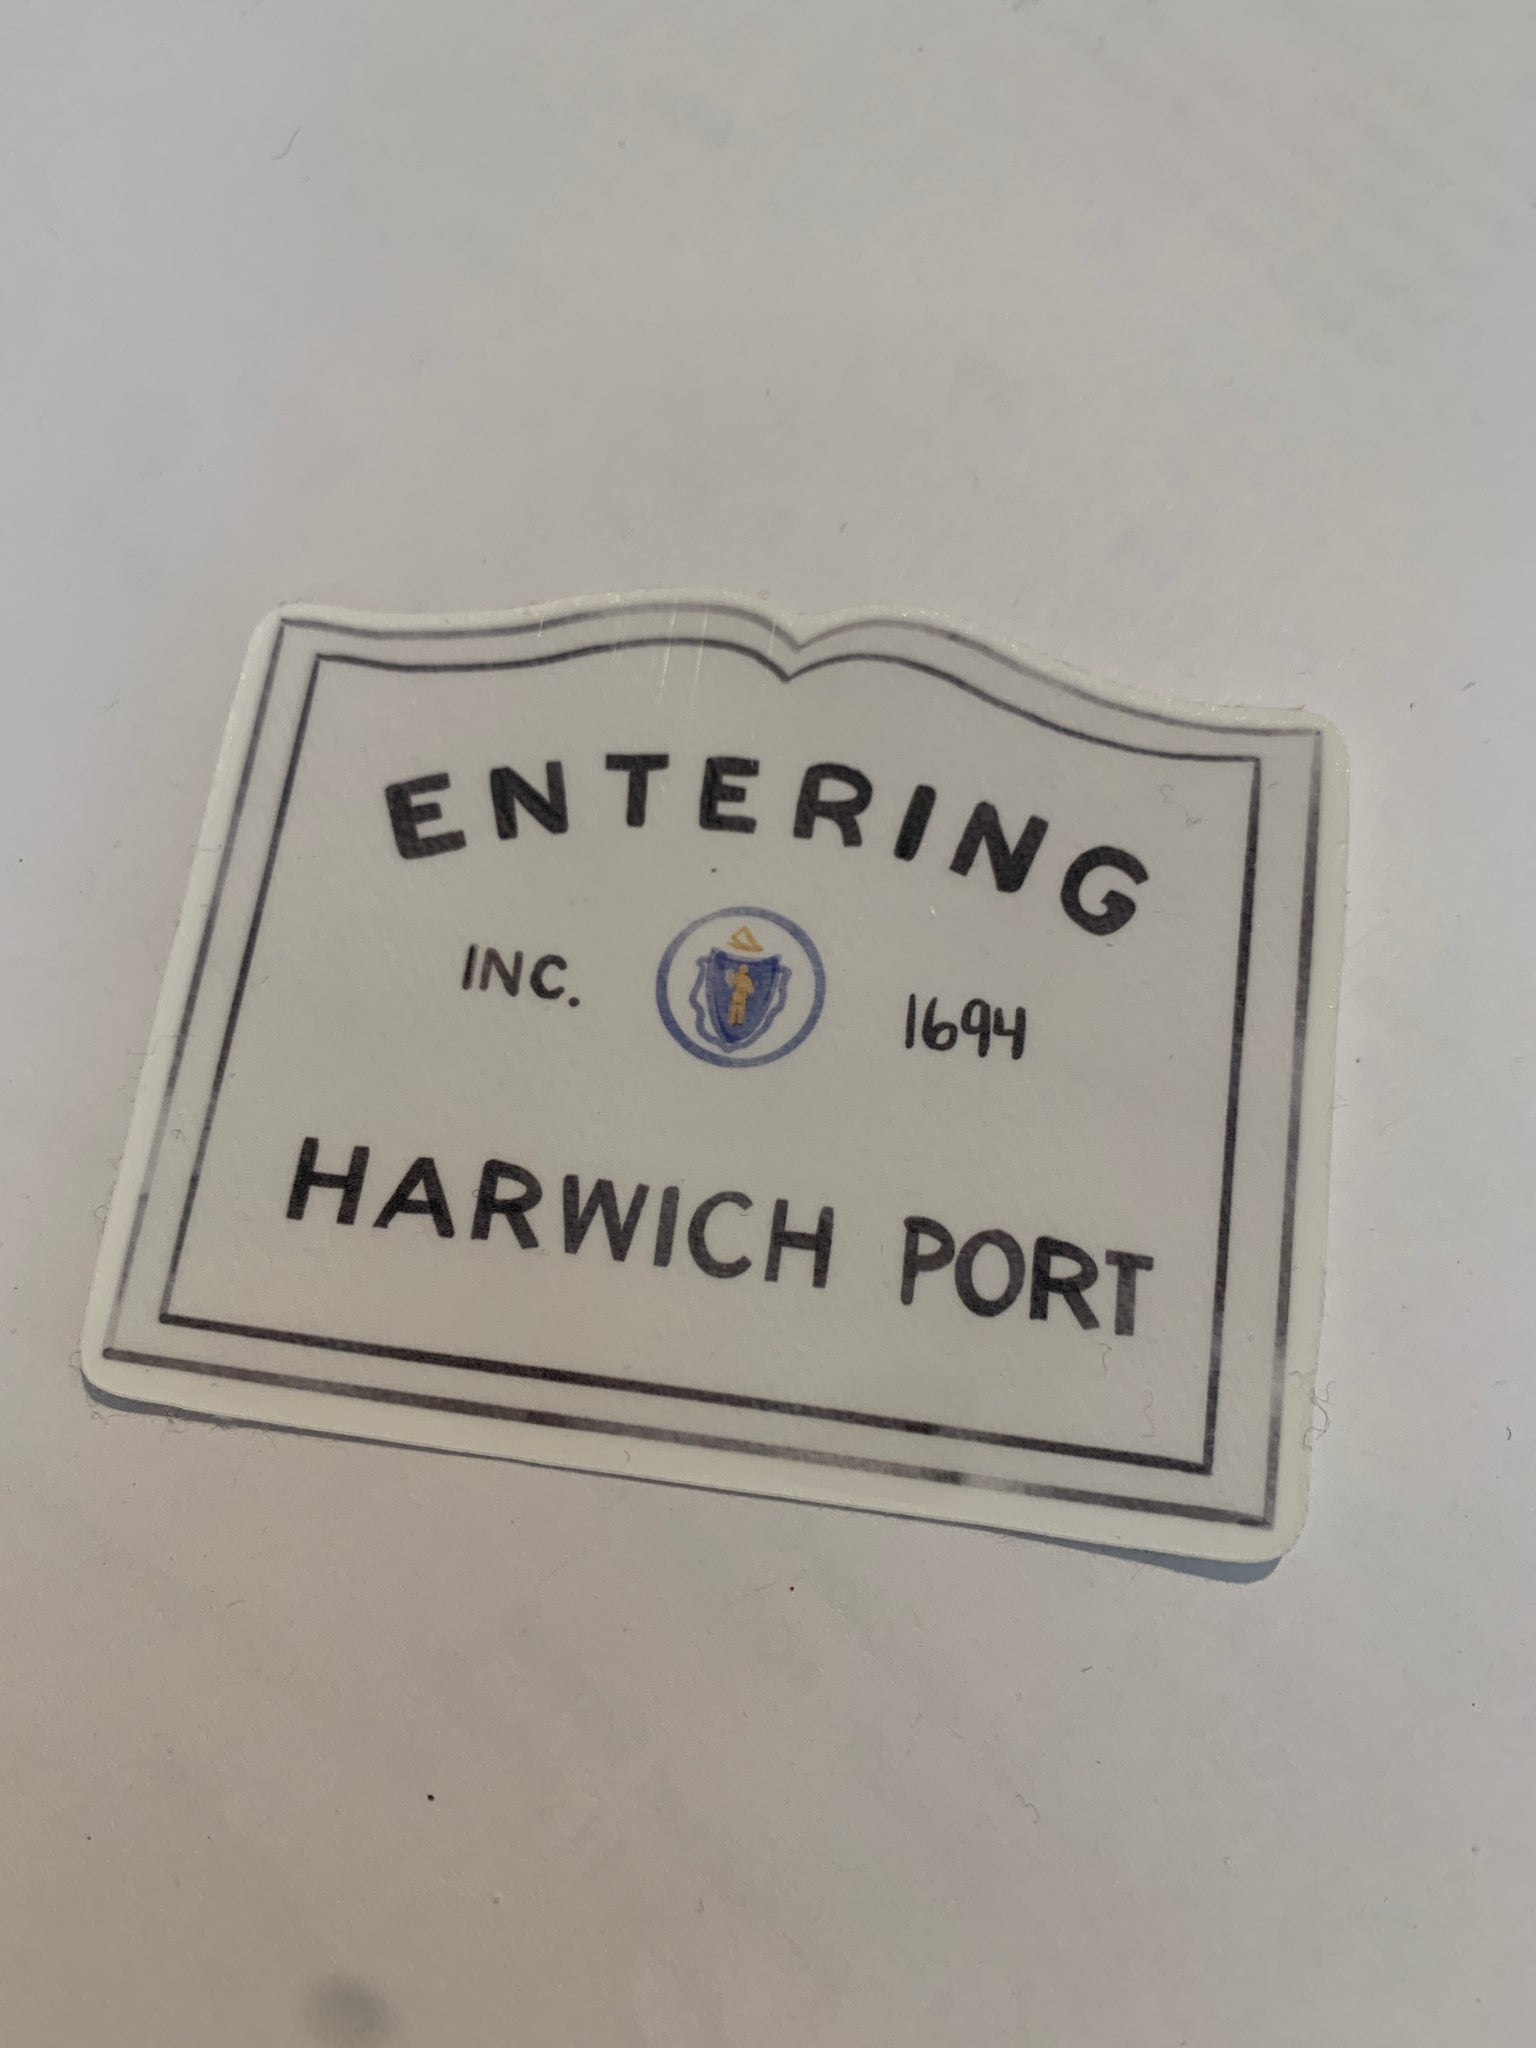 Entering harwich port sticker